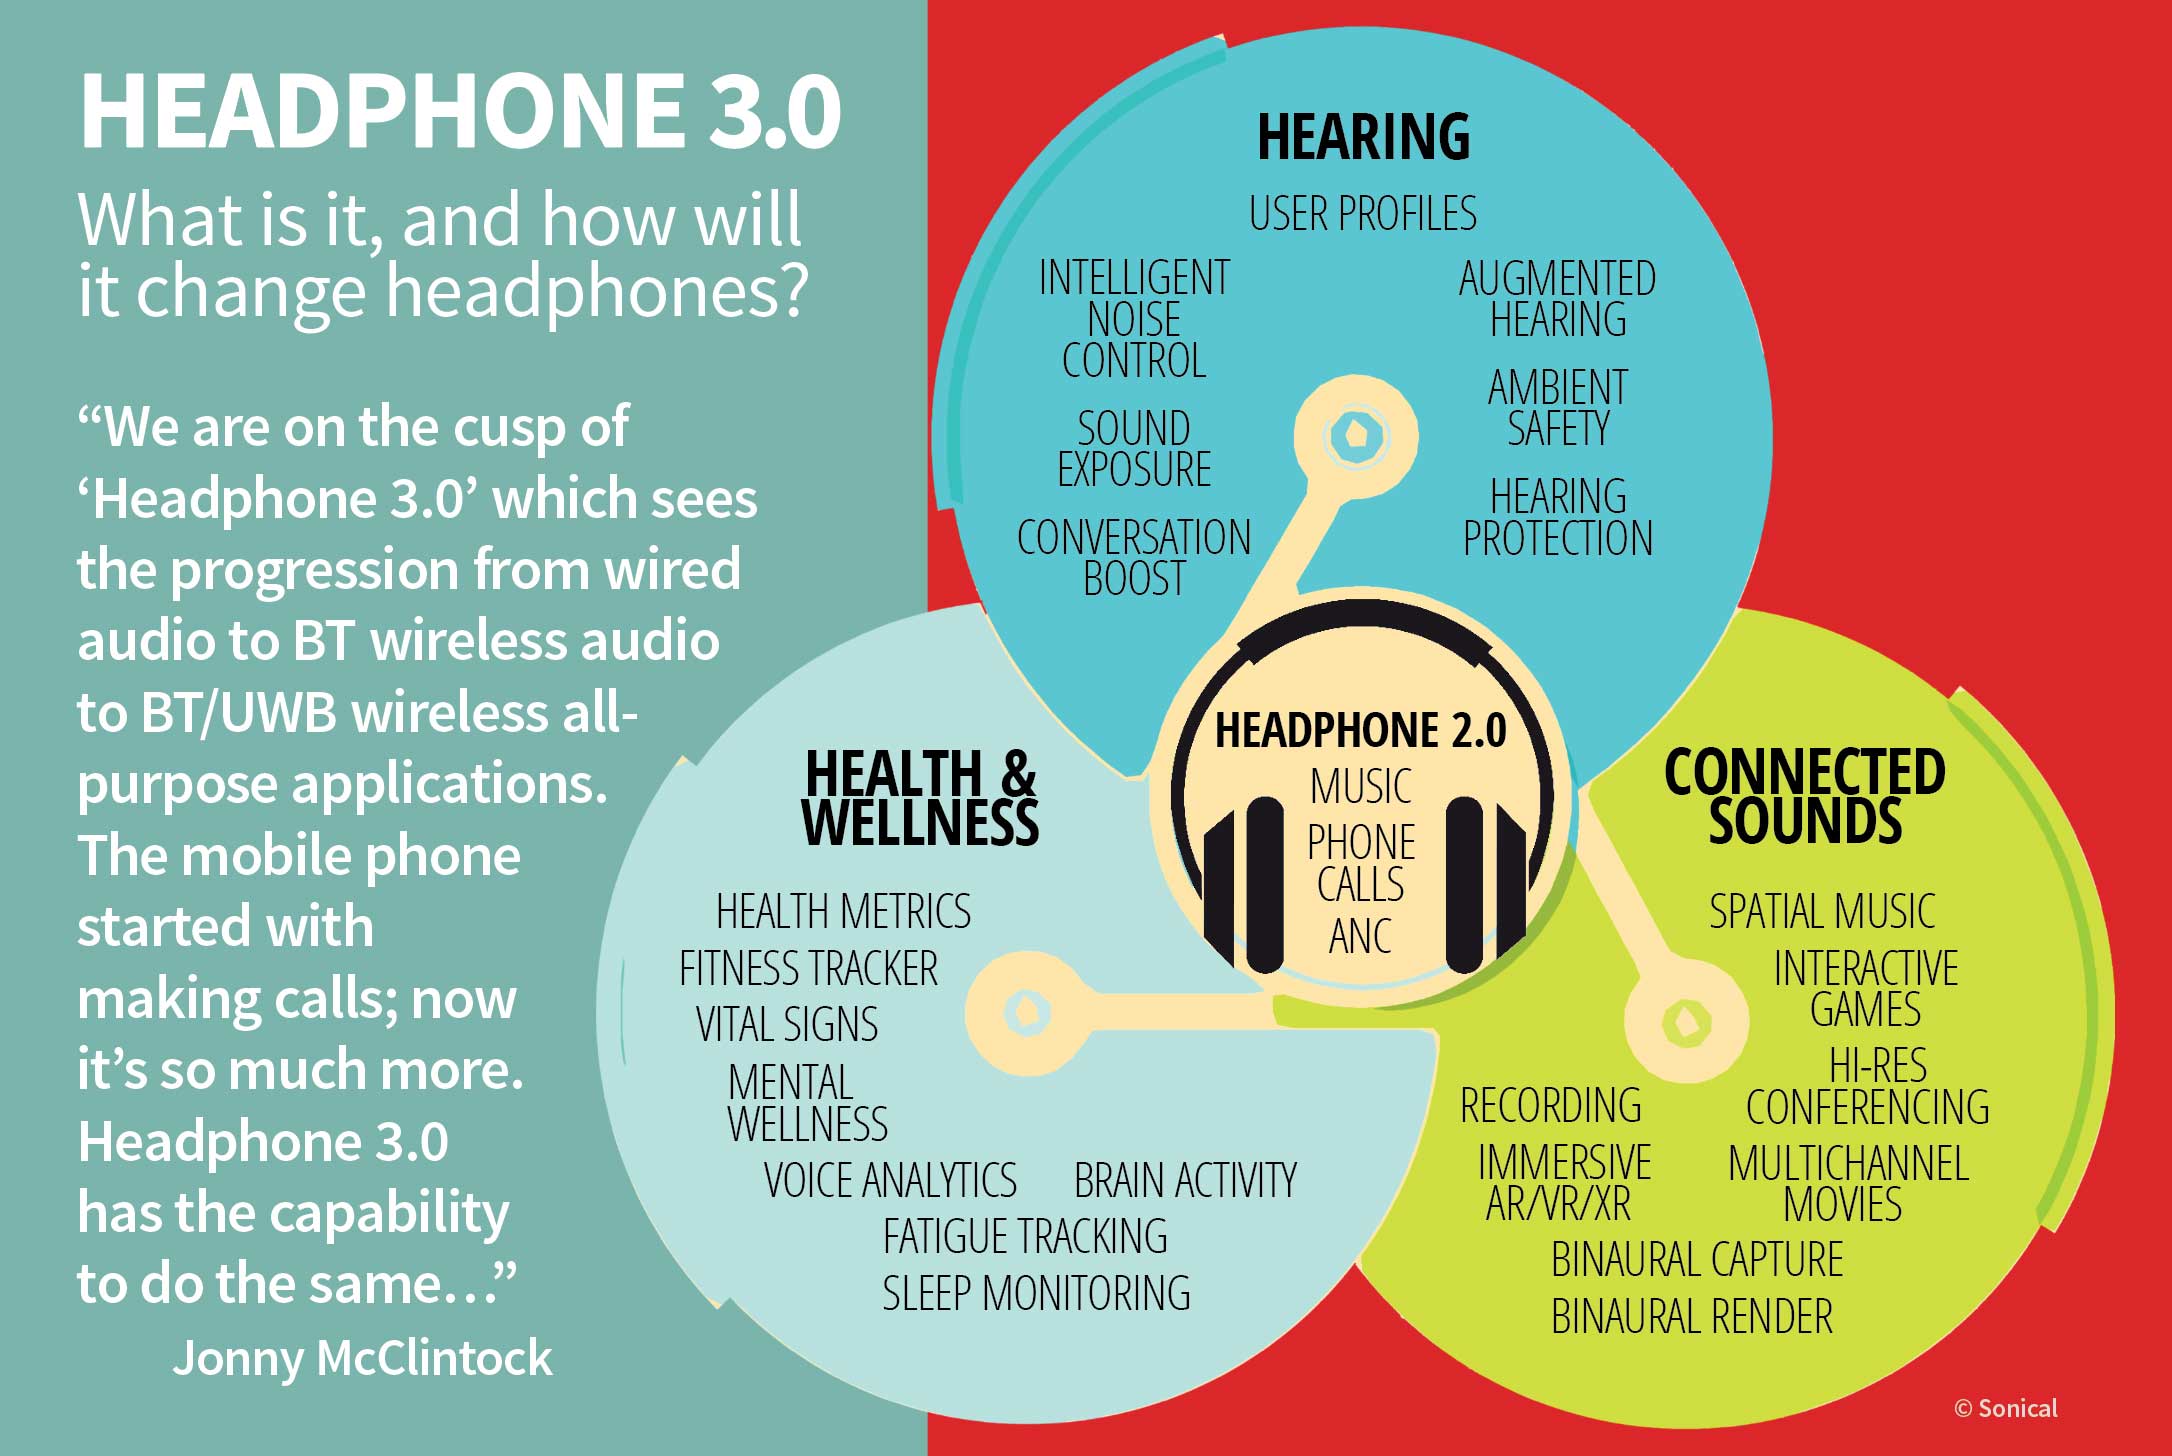 Headphone 3.0